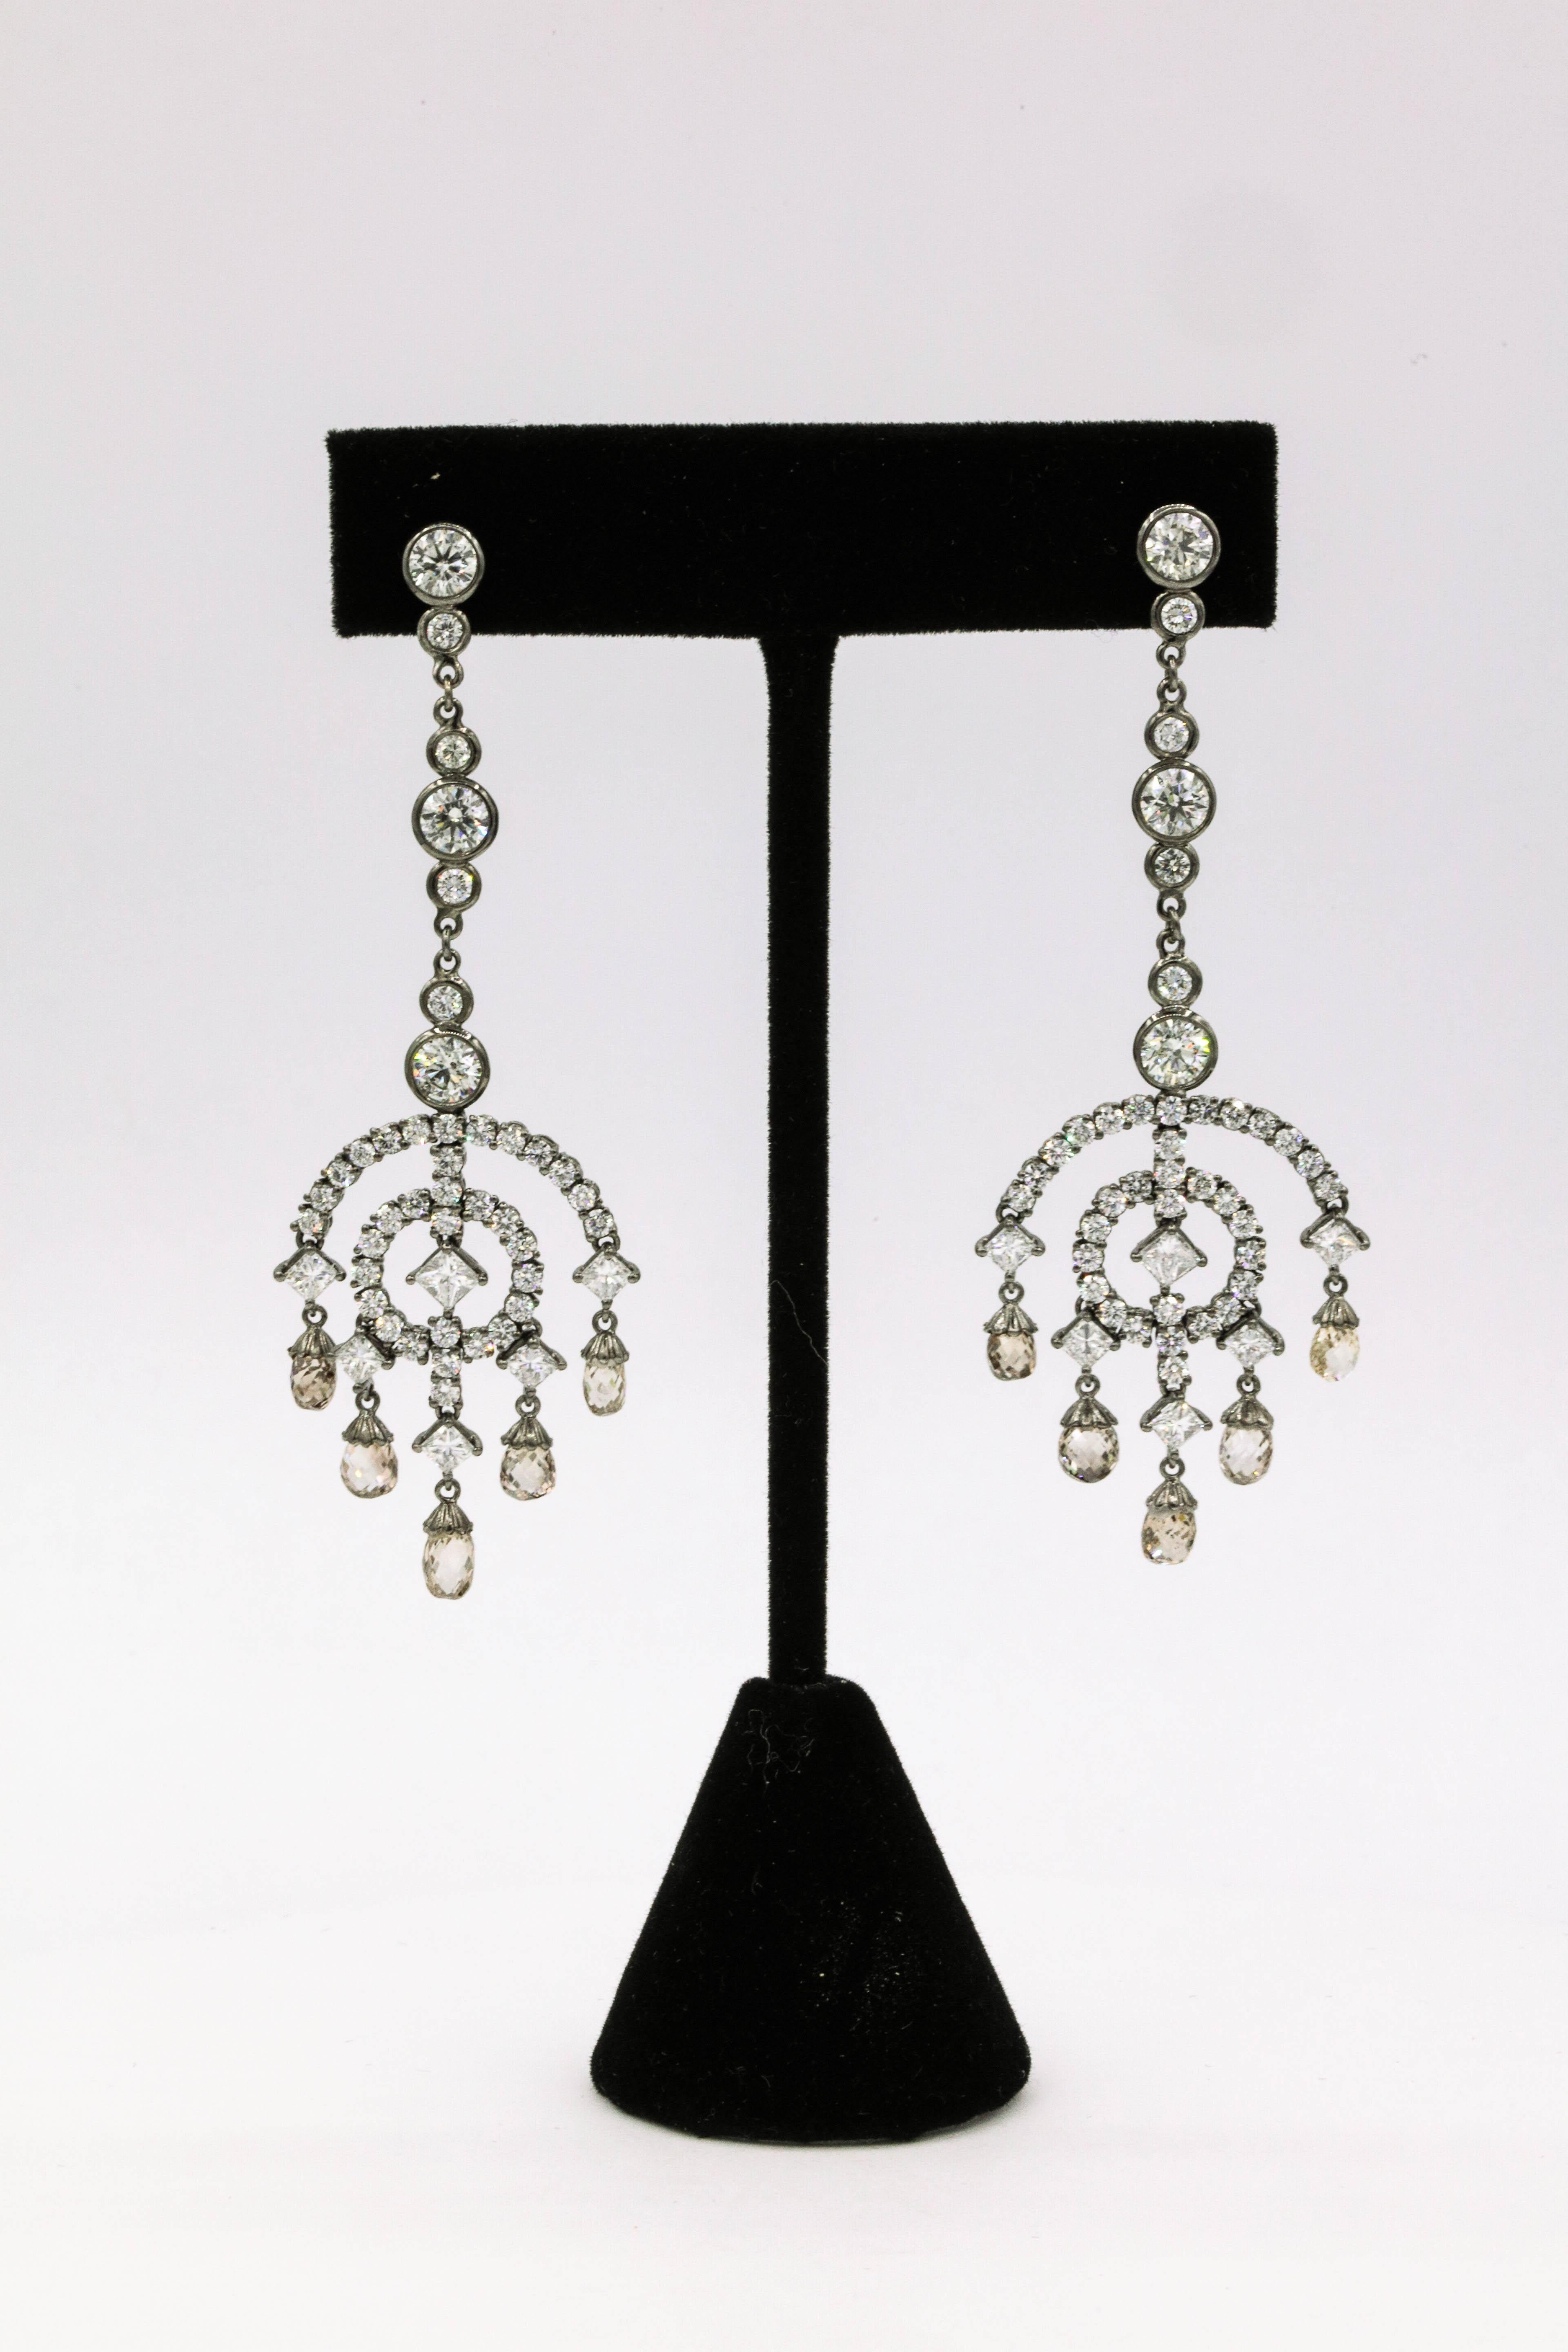 Diamond drop Art Deco motif earrings featuring 80 round brilliants 4.84 carats, 10 princess cut diamonds, 2.17 carats and 10 briolette diamonds, 5.92 carats, in 14k black rhodium. 
Color: G-H
Clarity: SI